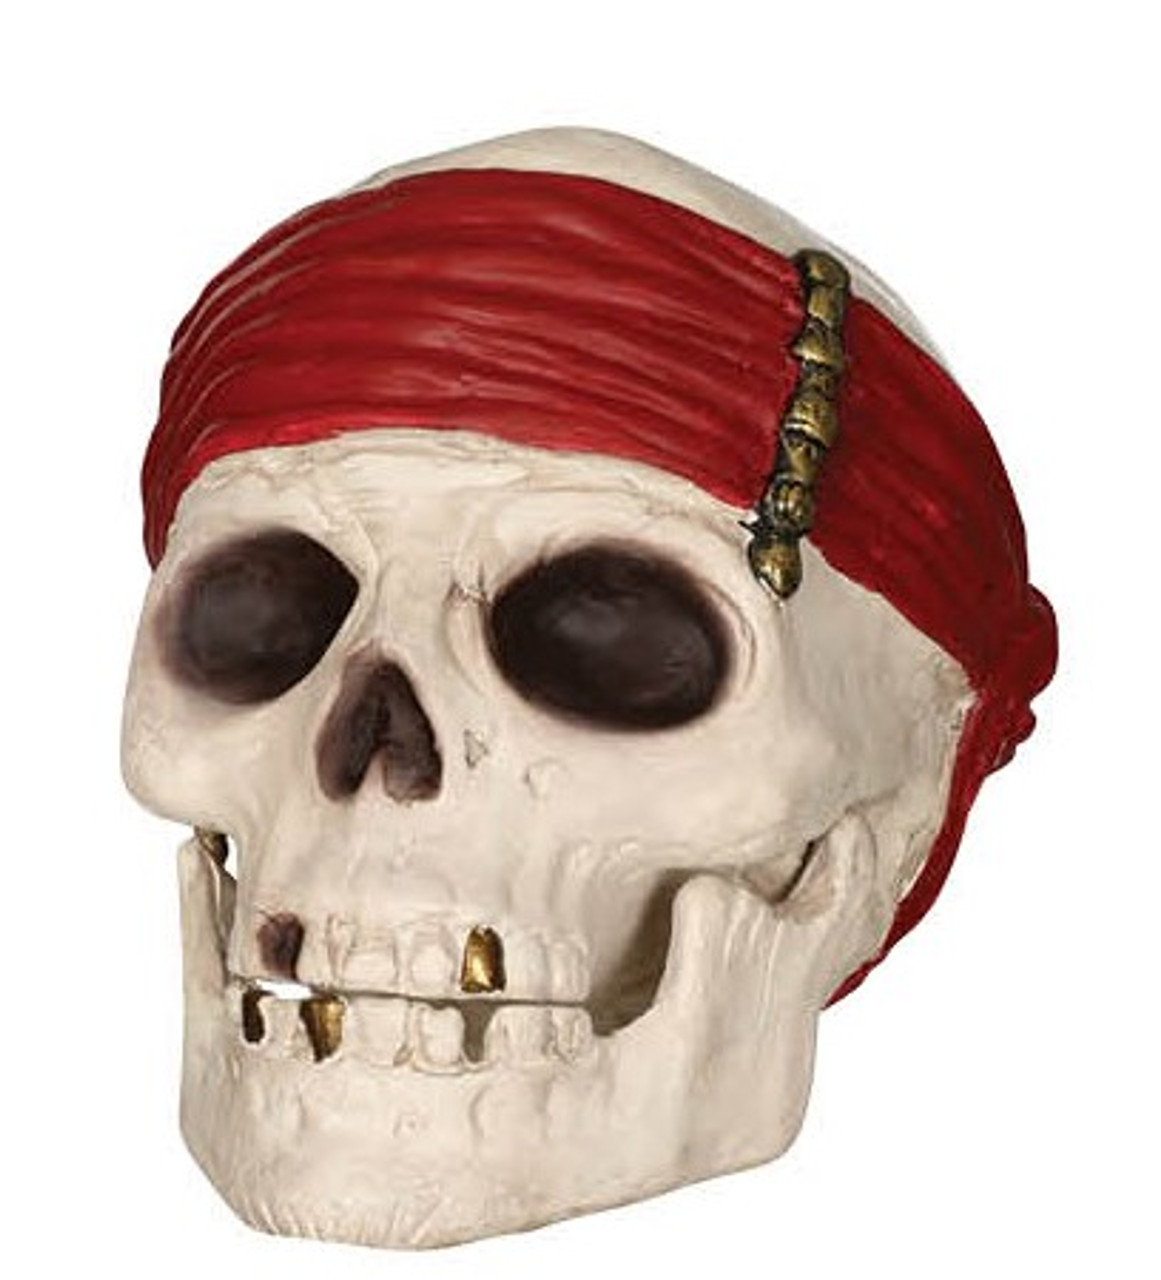 Disney's Pirates of the Caribbean Dead Man's Skull